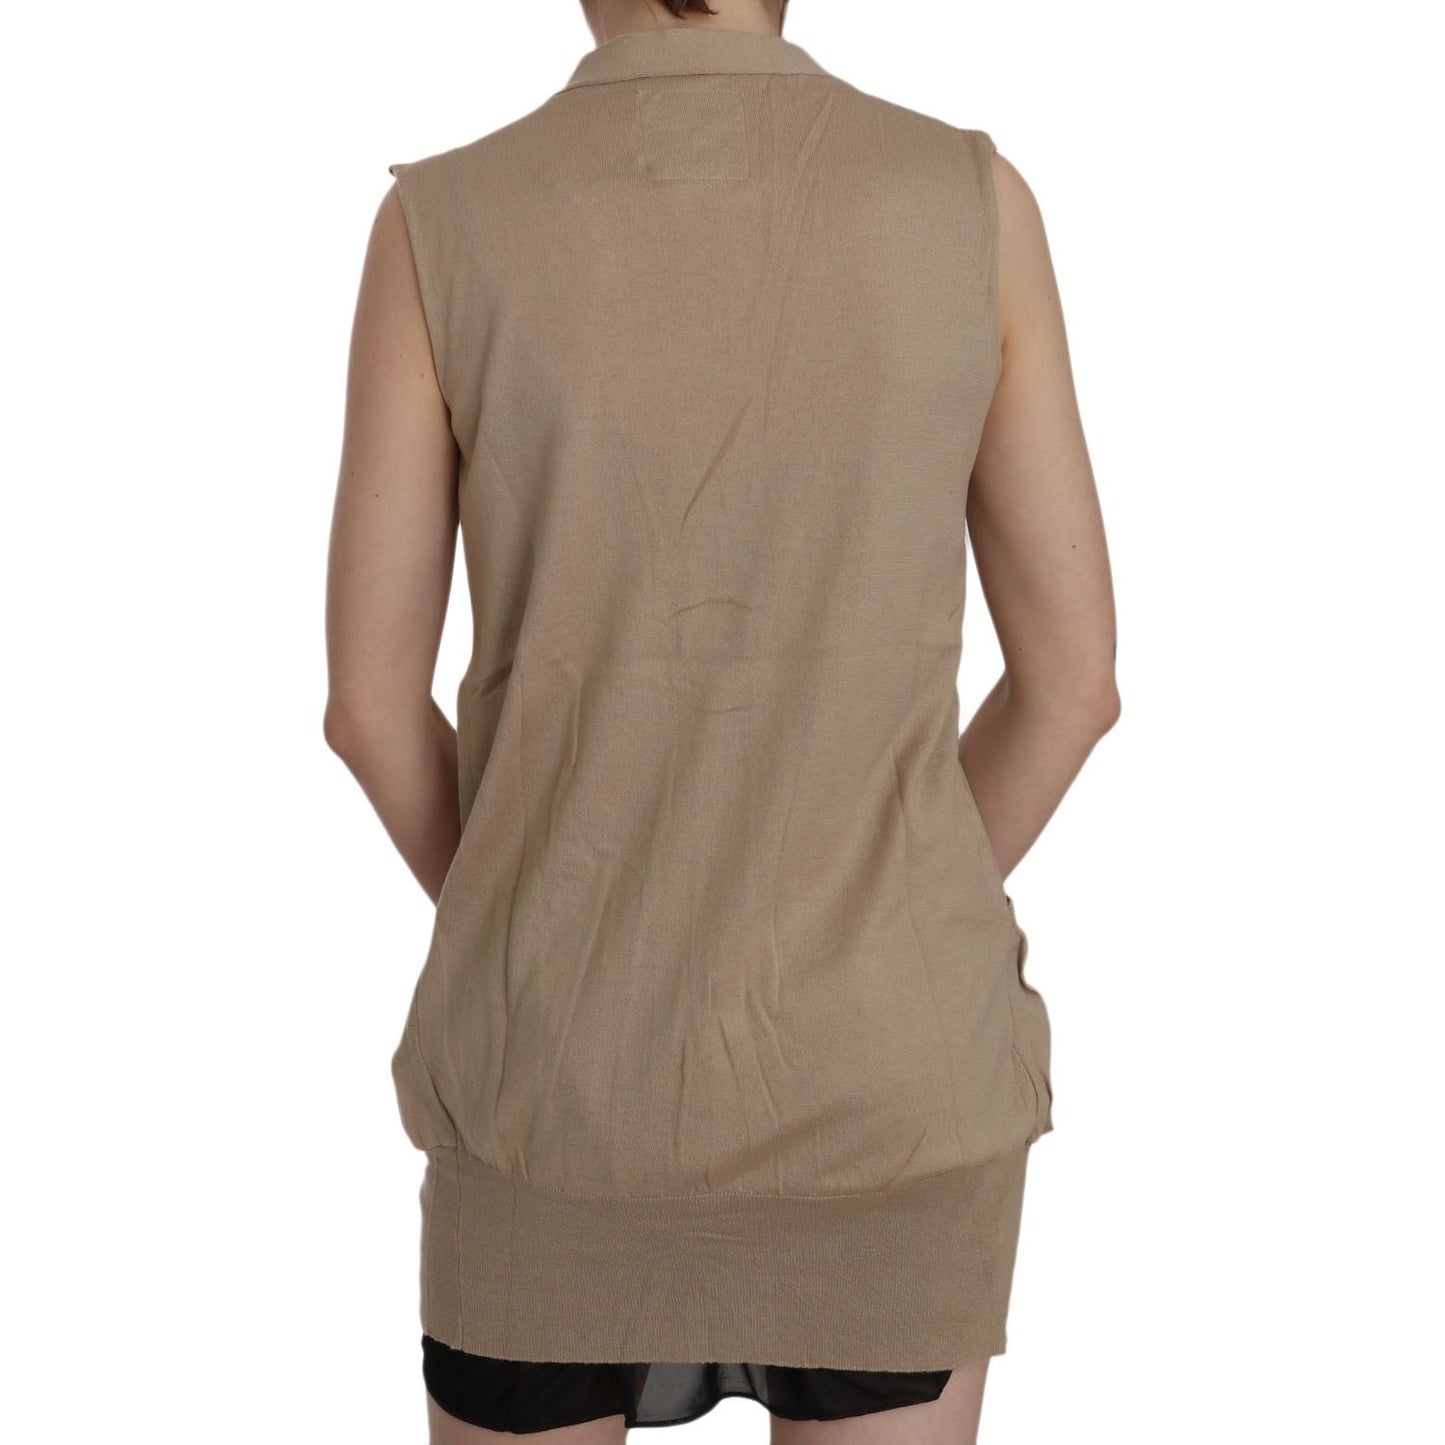 PINK MEMORIES Elegant Sleeveless Cotton Vest brown-100-cotton-sleeveless-cardigan-top-vest-1 IMG_1909-7987a508-ac0.jpg